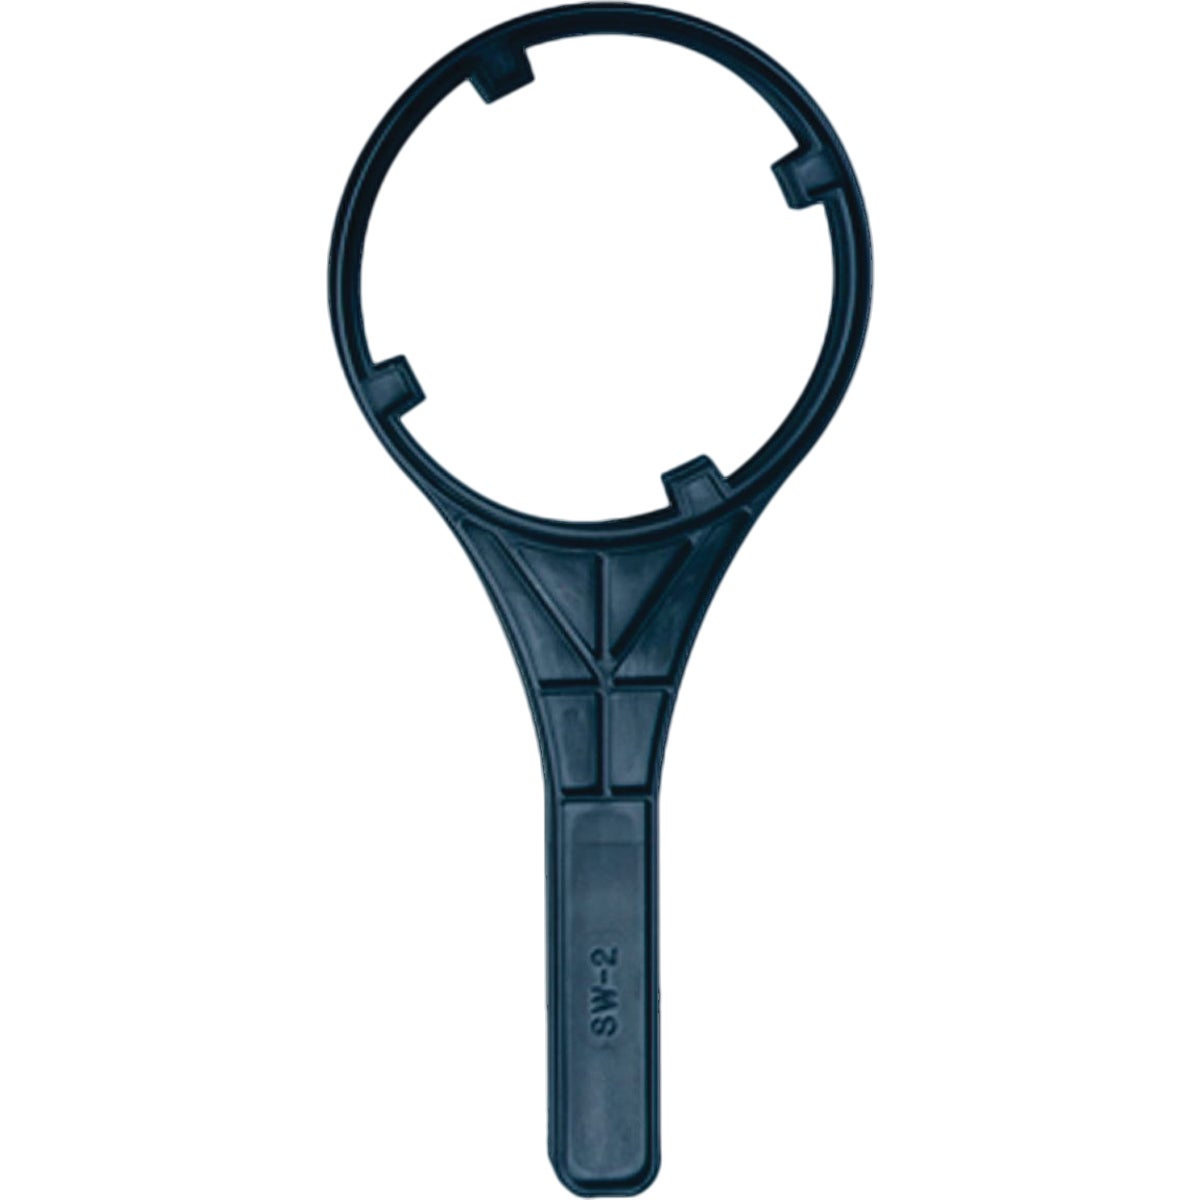 Item 432733, Circular plastic wrench designed to loosen bottom of filter housing during 